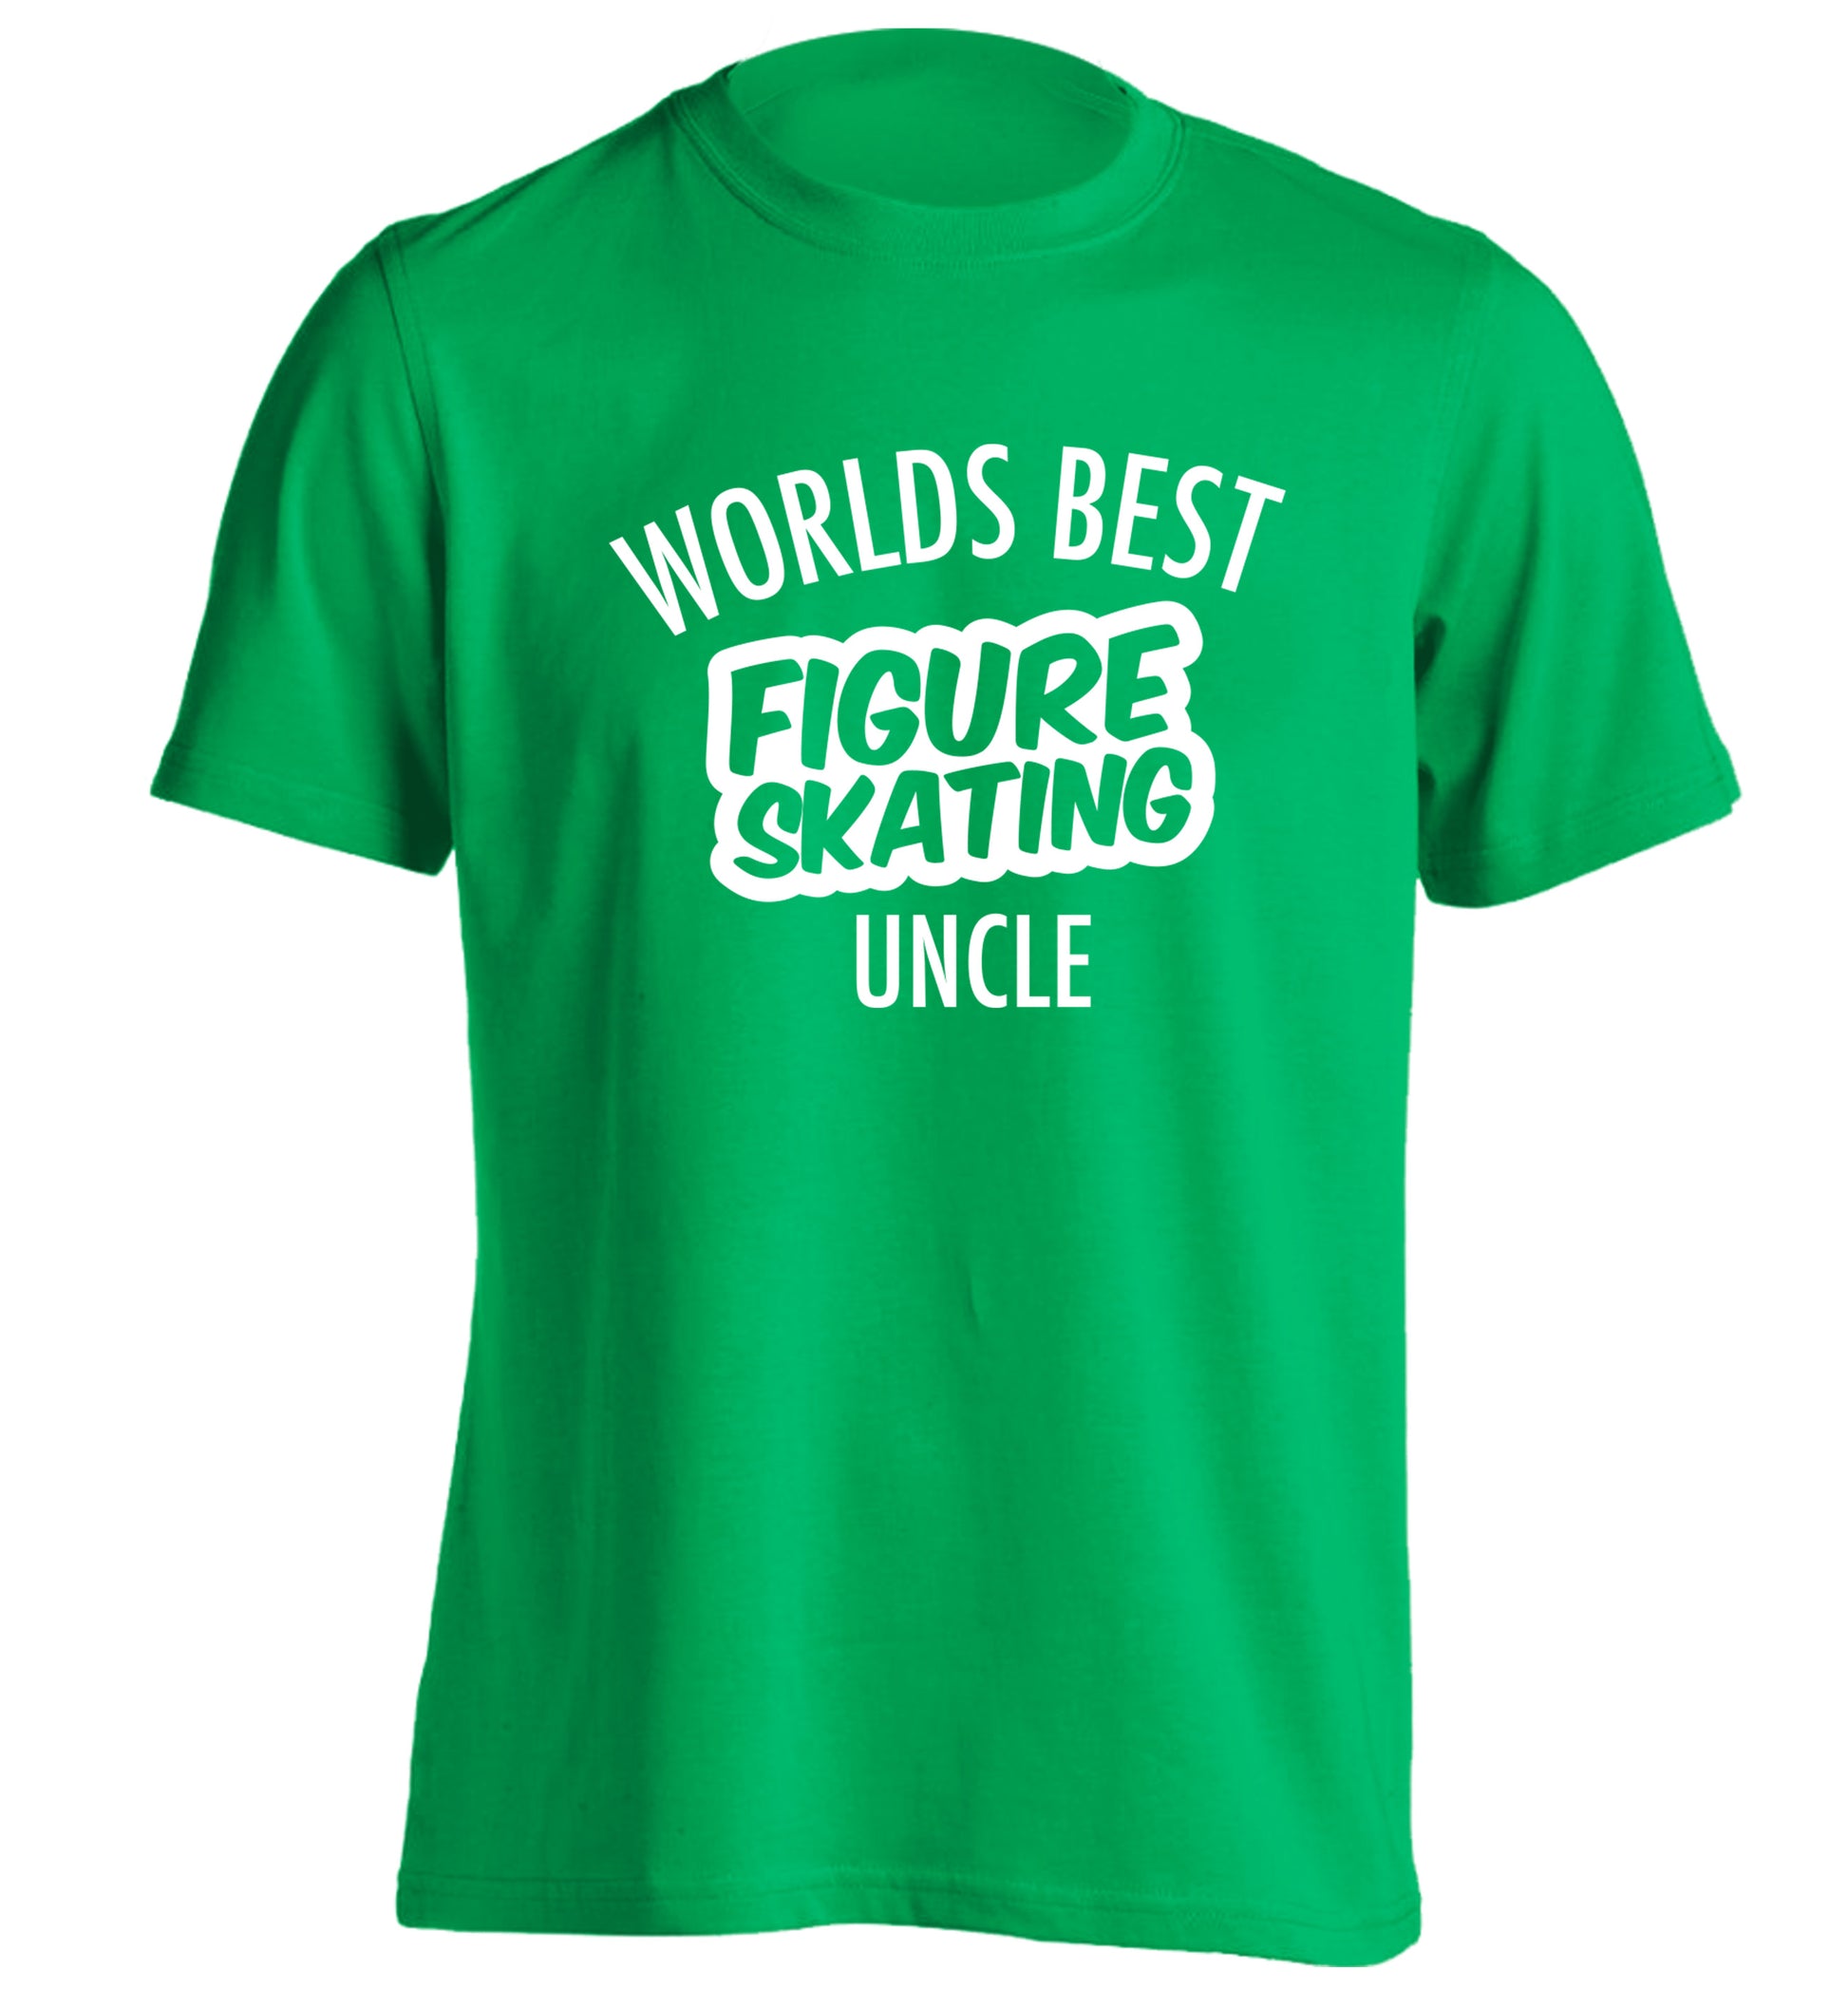 Worlds best figure skating uncle adults unisexgreen Tshirt 2XL